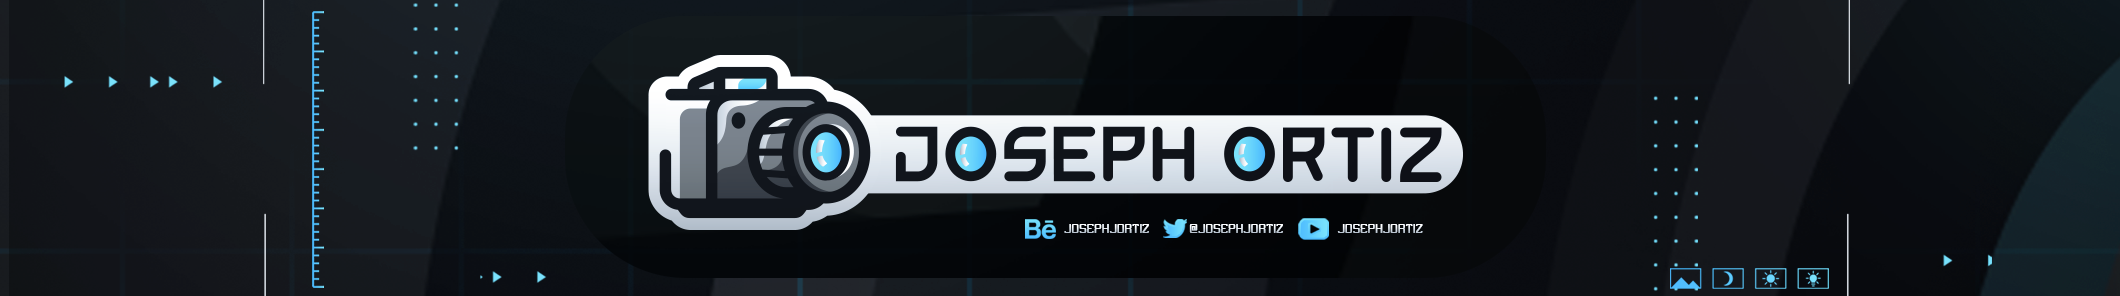 Banner de perfil de Joseph Ortiz